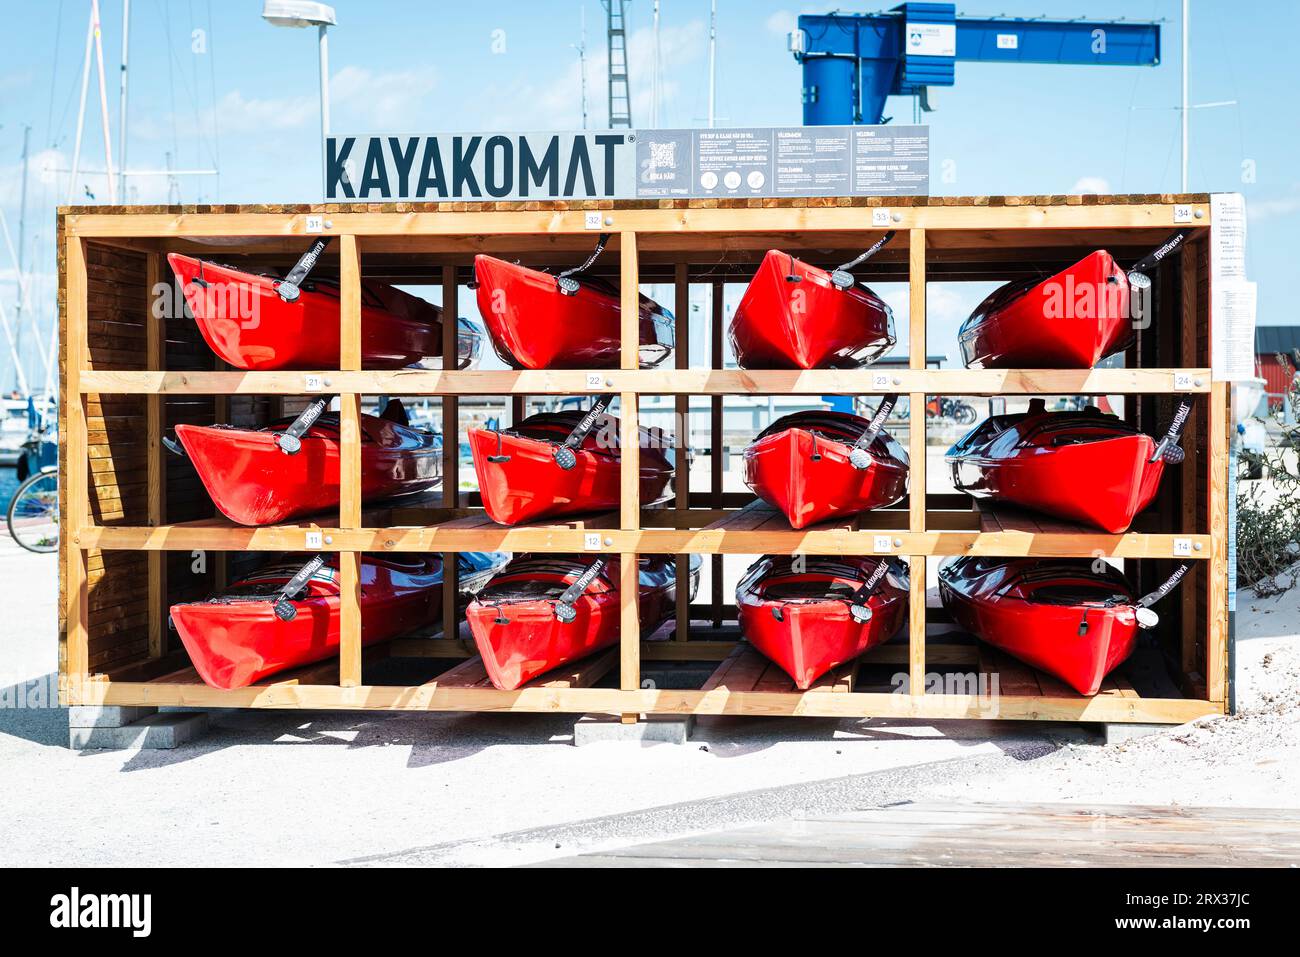 Kayakomat - rack en bois avec douze kayaks rouges à louer dans le port de Skkanör med Falsterbo, Skåne, Suède Banque D'Images